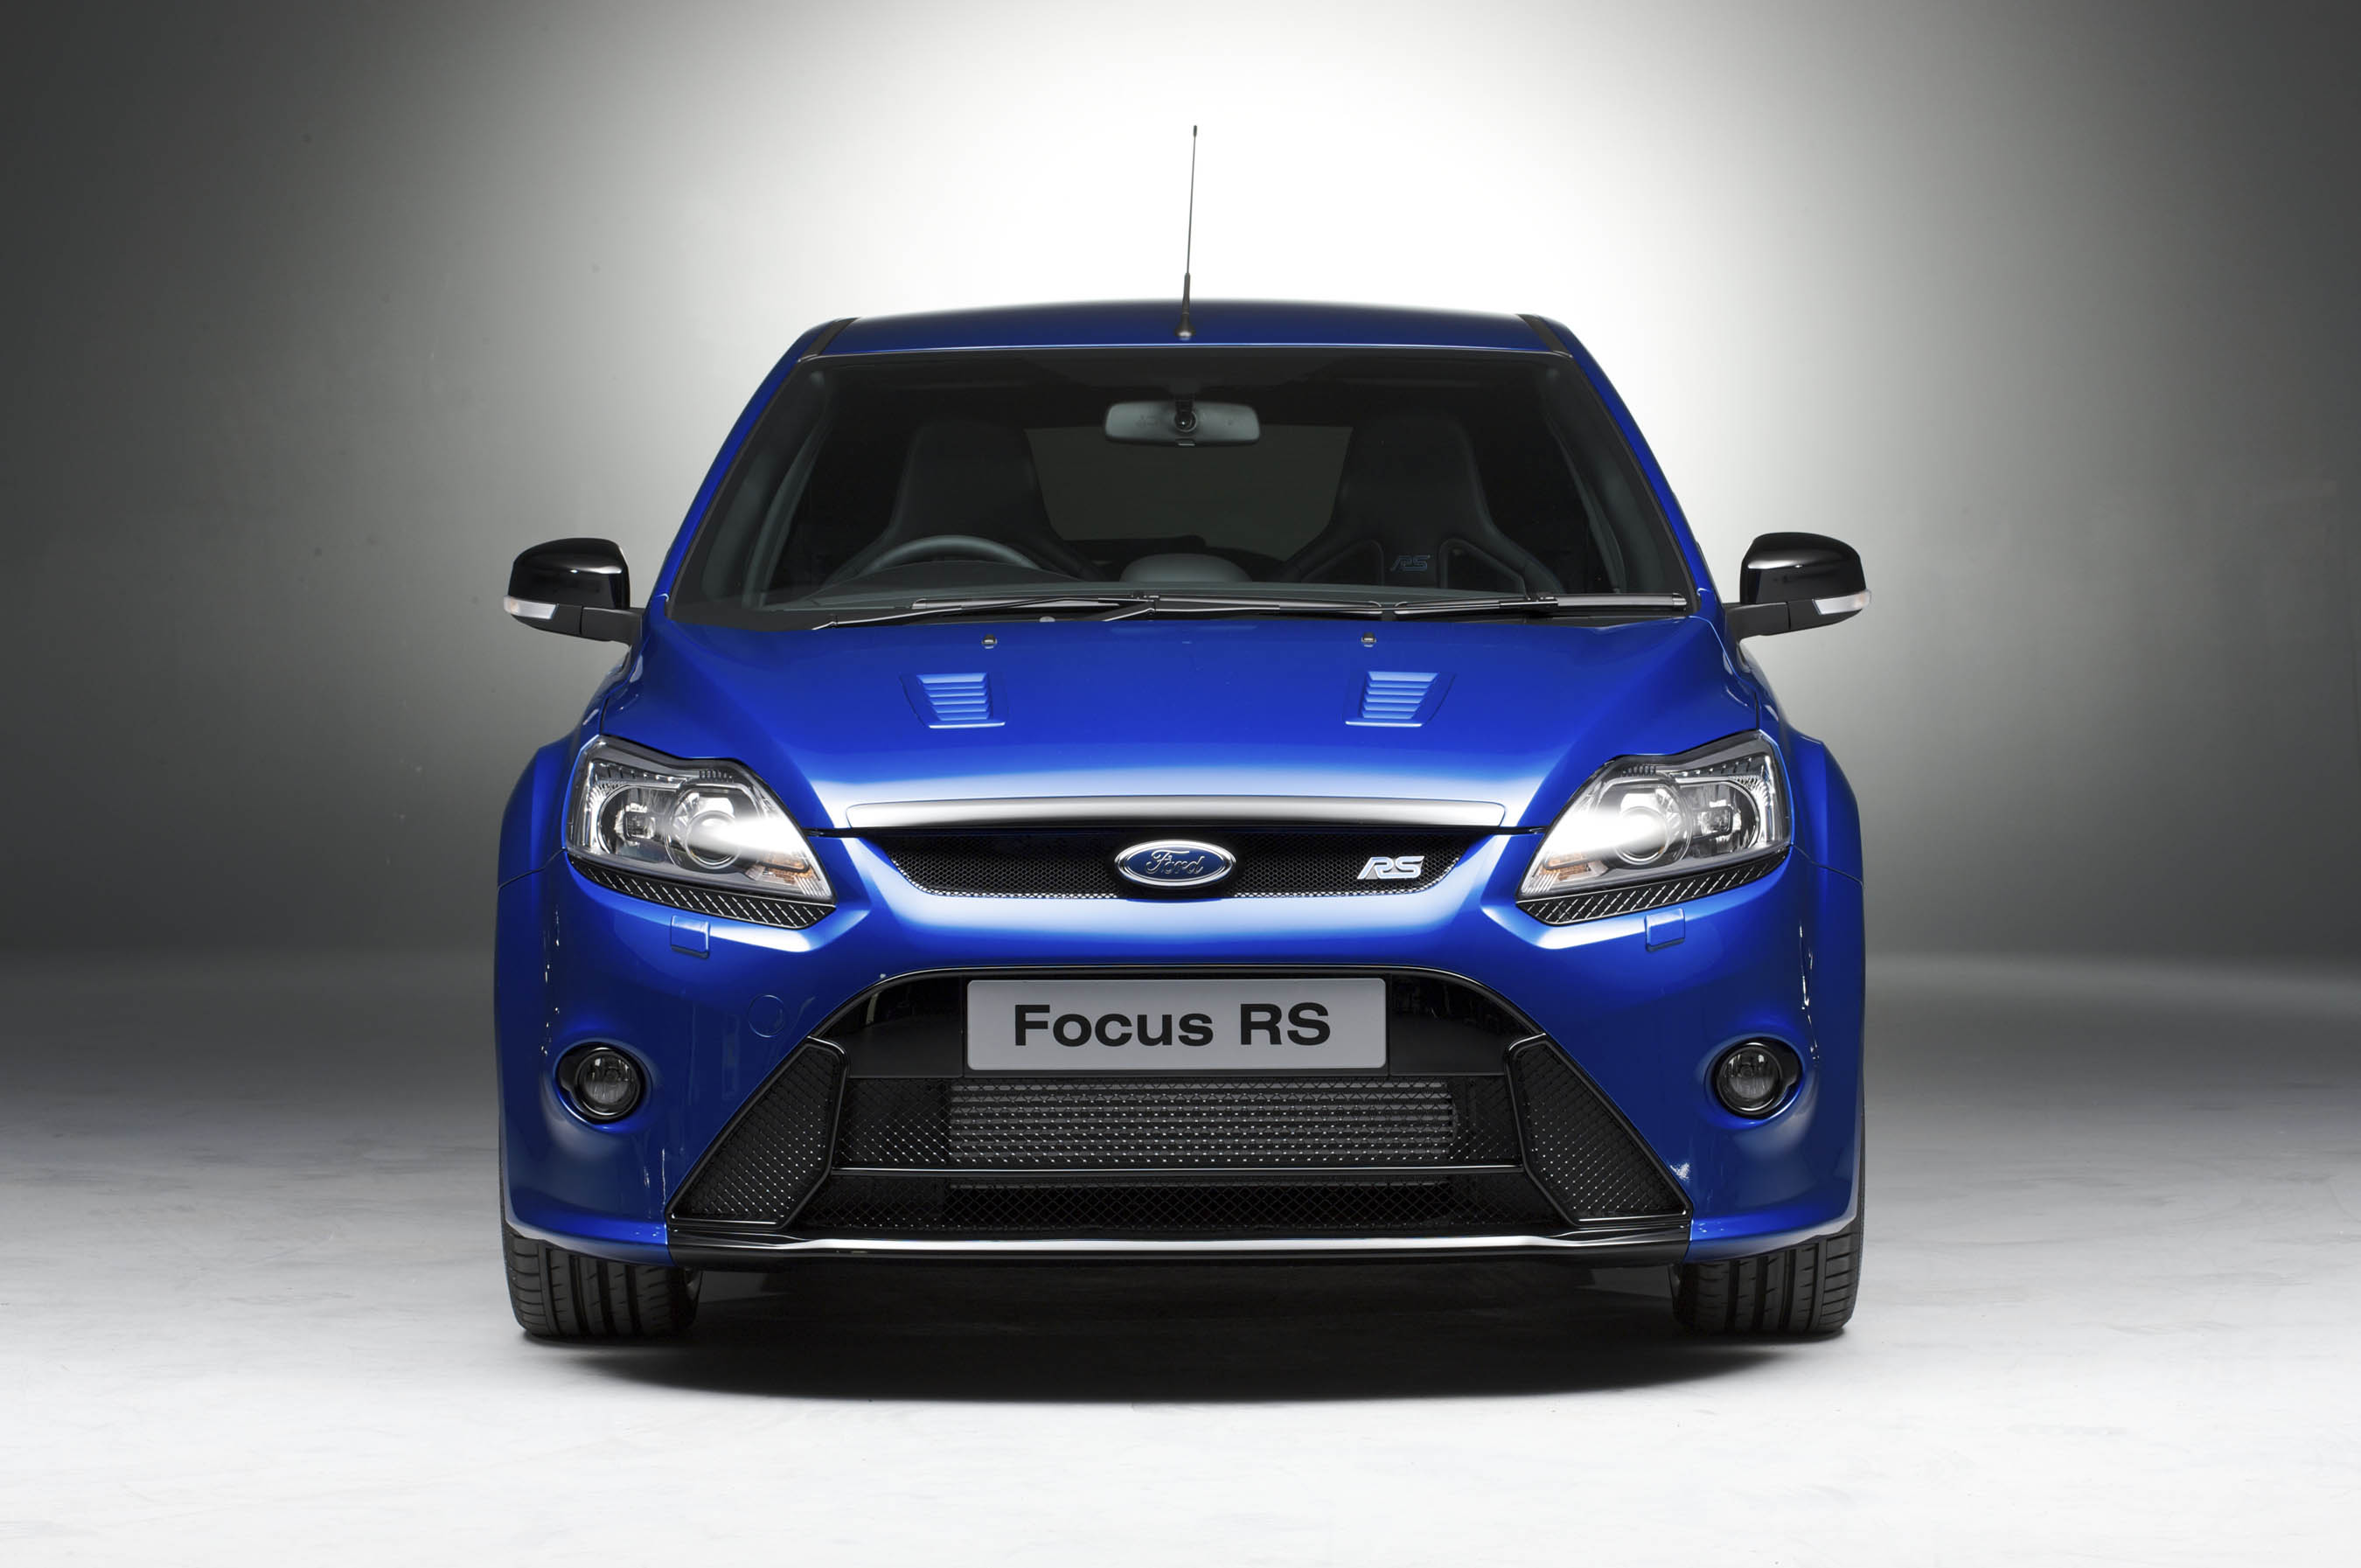 Cena Ford Focusu RS pro náš trh stanovena - 990 000 Kč